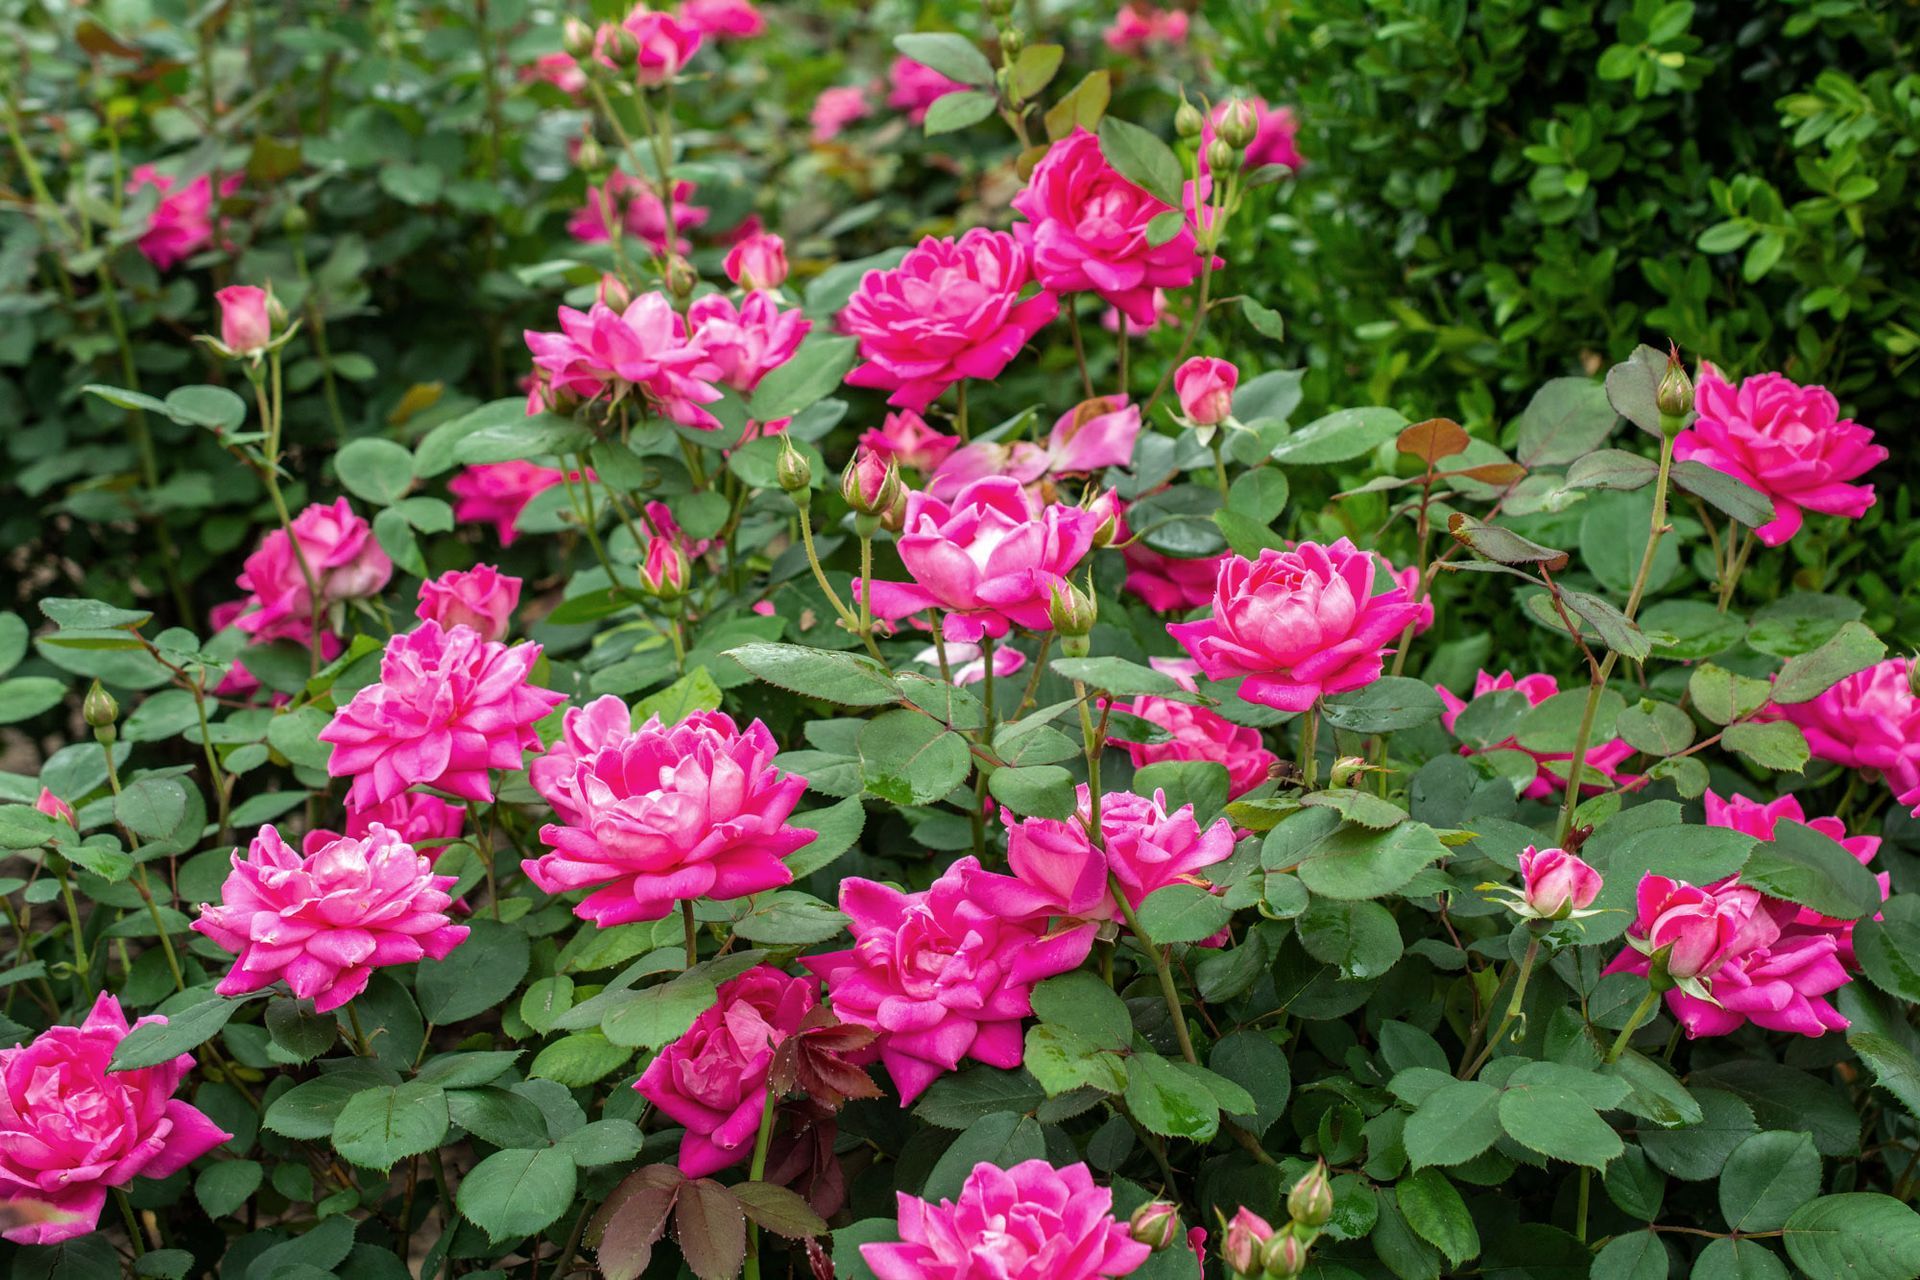 Double Pink Knockout Rose shrub flowering bush for sale in Lebanon